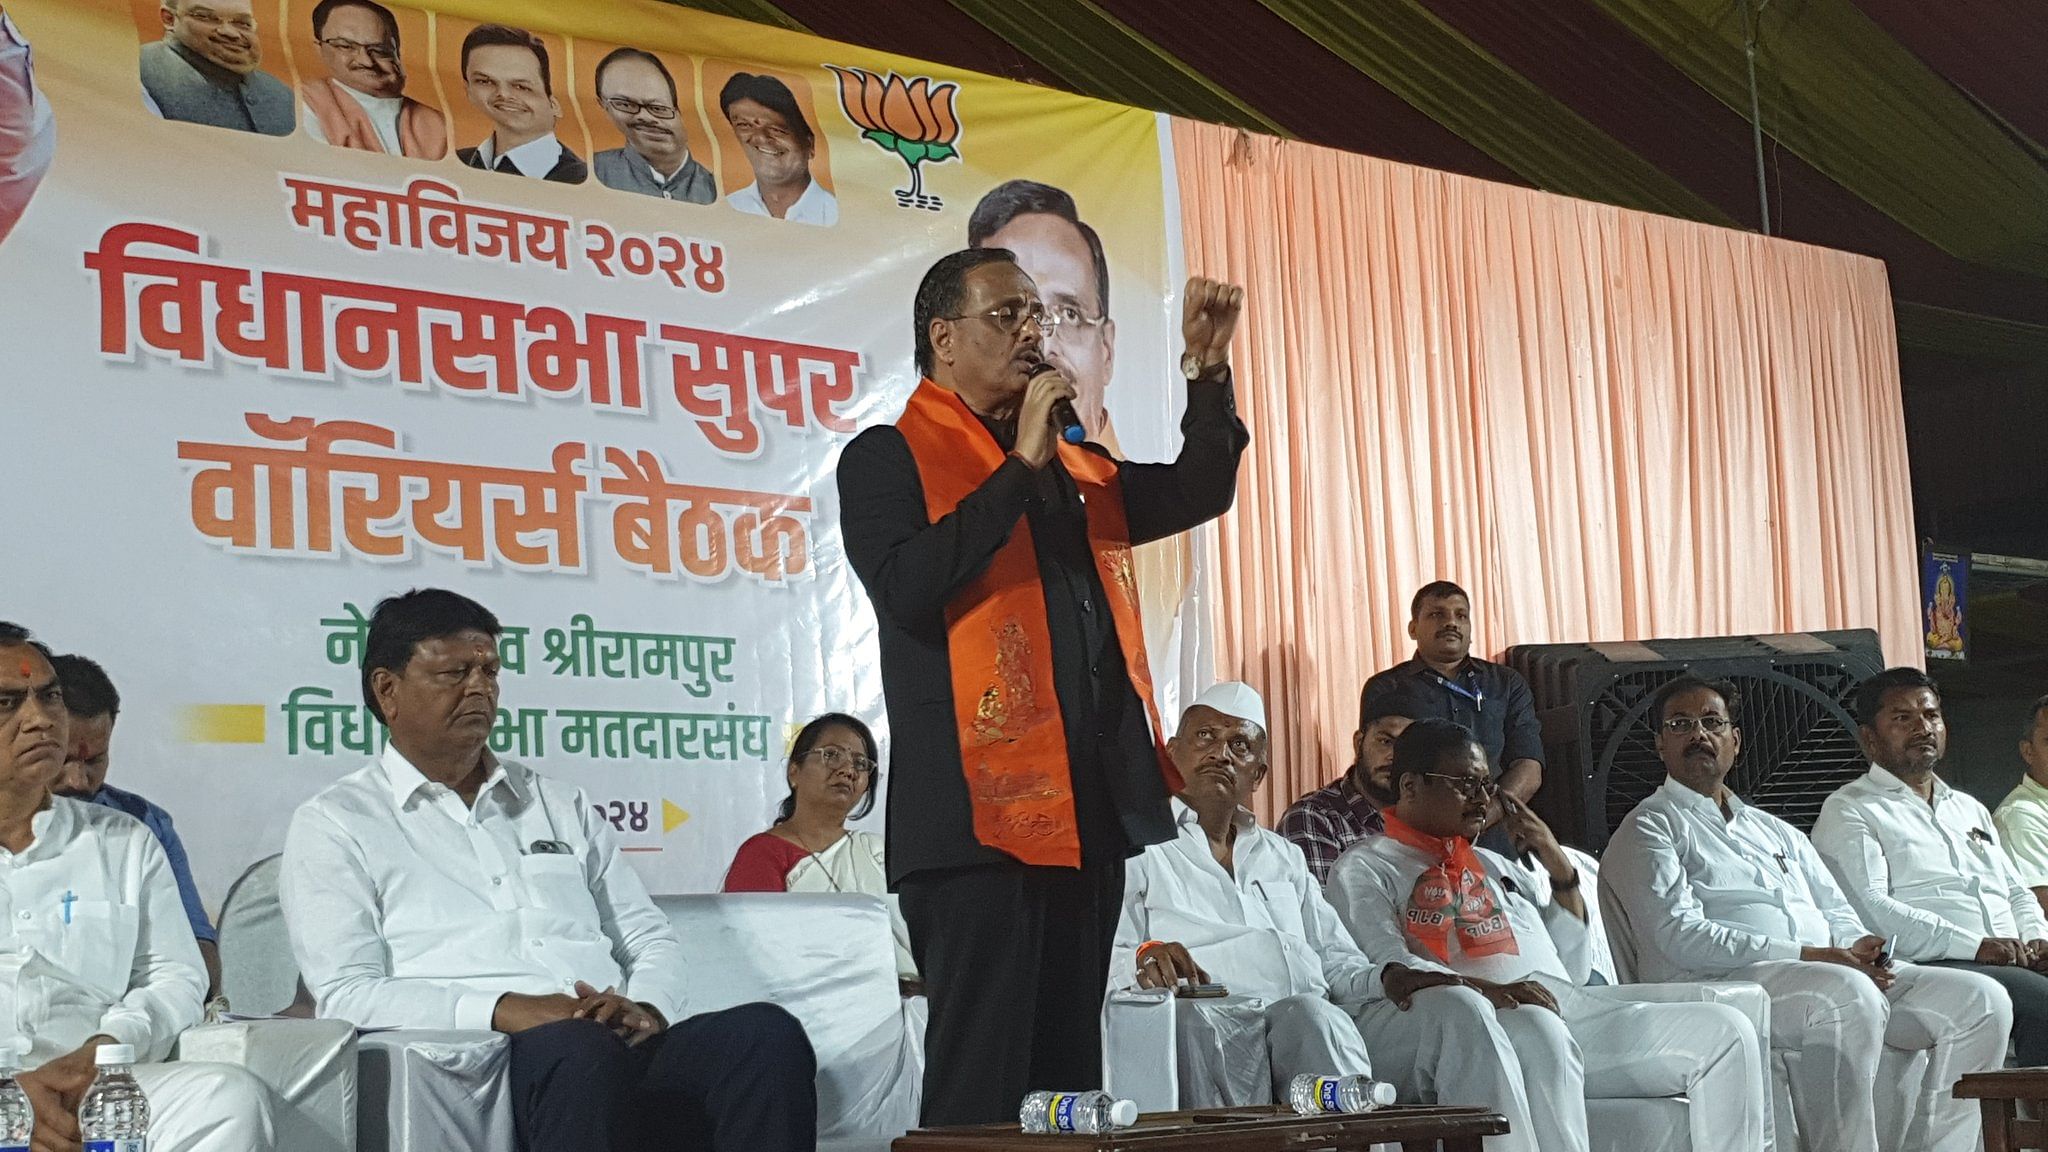 <div class="paragraphs"><p>Sharma at a BJP rally in Maharashtra's Shirdi.&nbsp;</p></div>